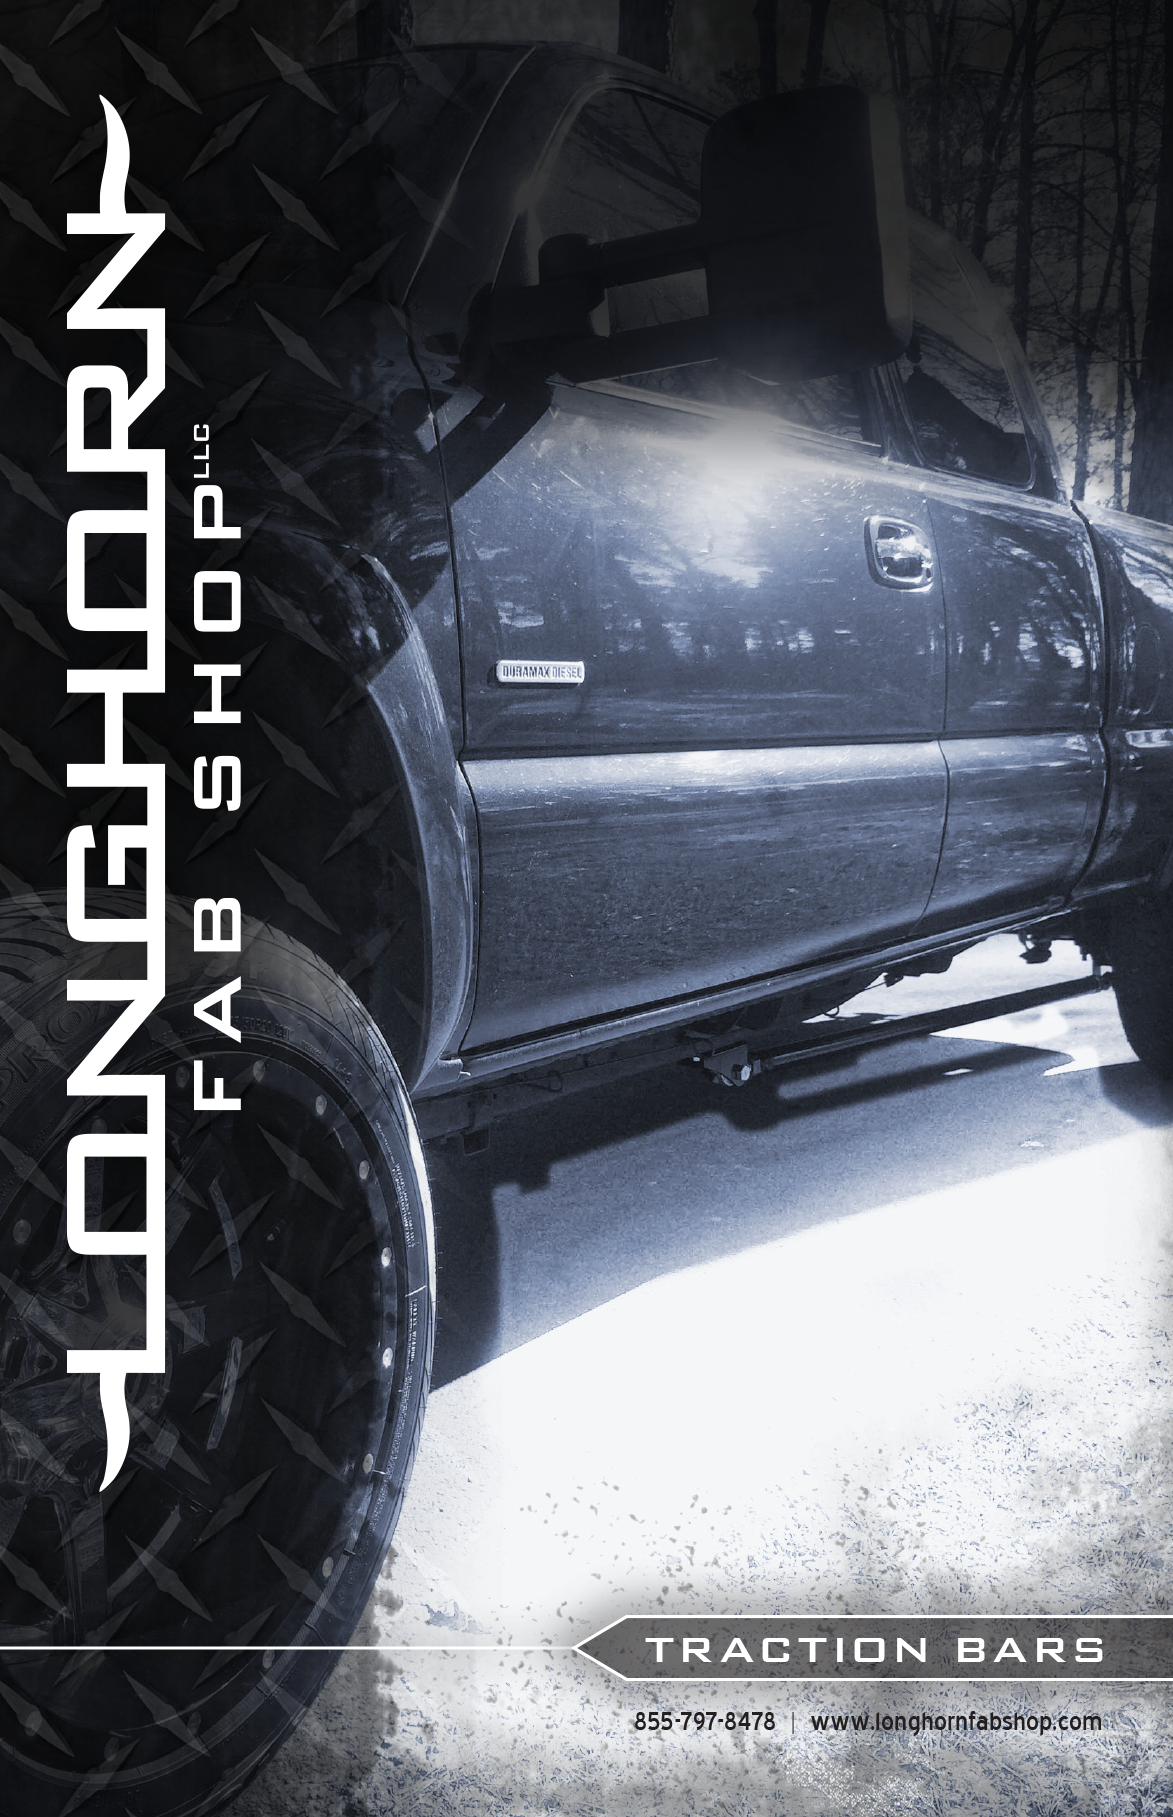 Longhorn Fab Shop Traction Bar Brochure